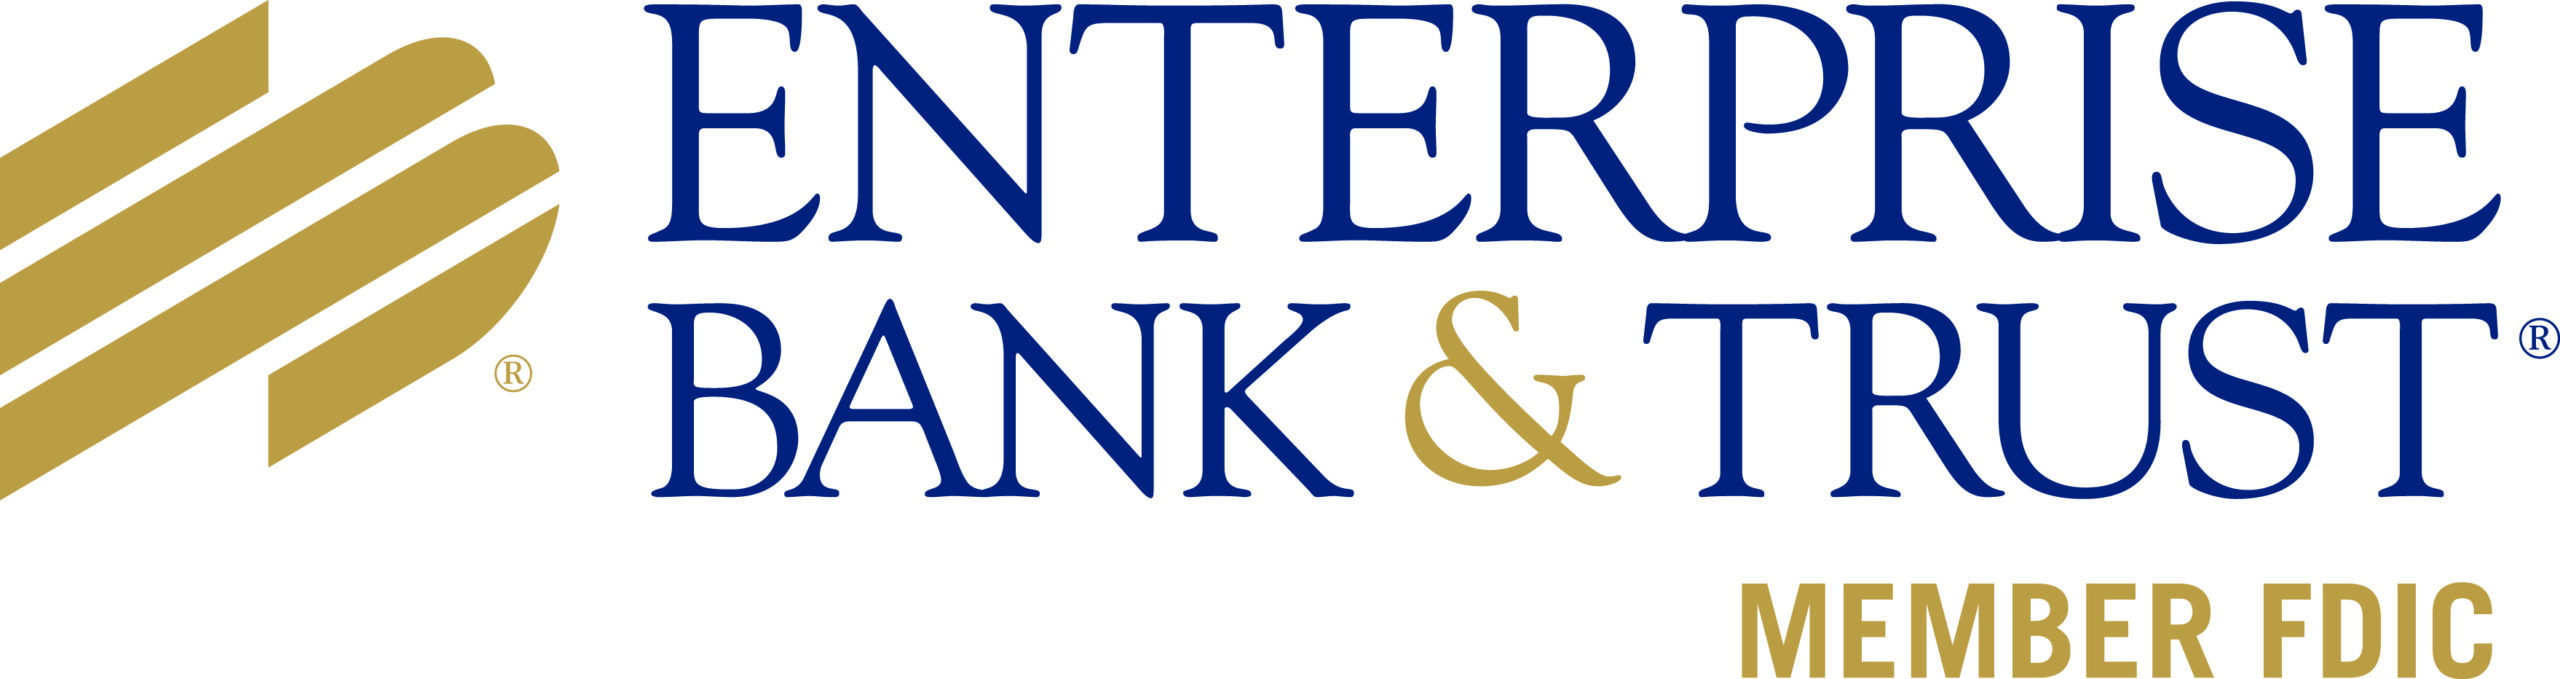 Enterprise Bank & Trust logo